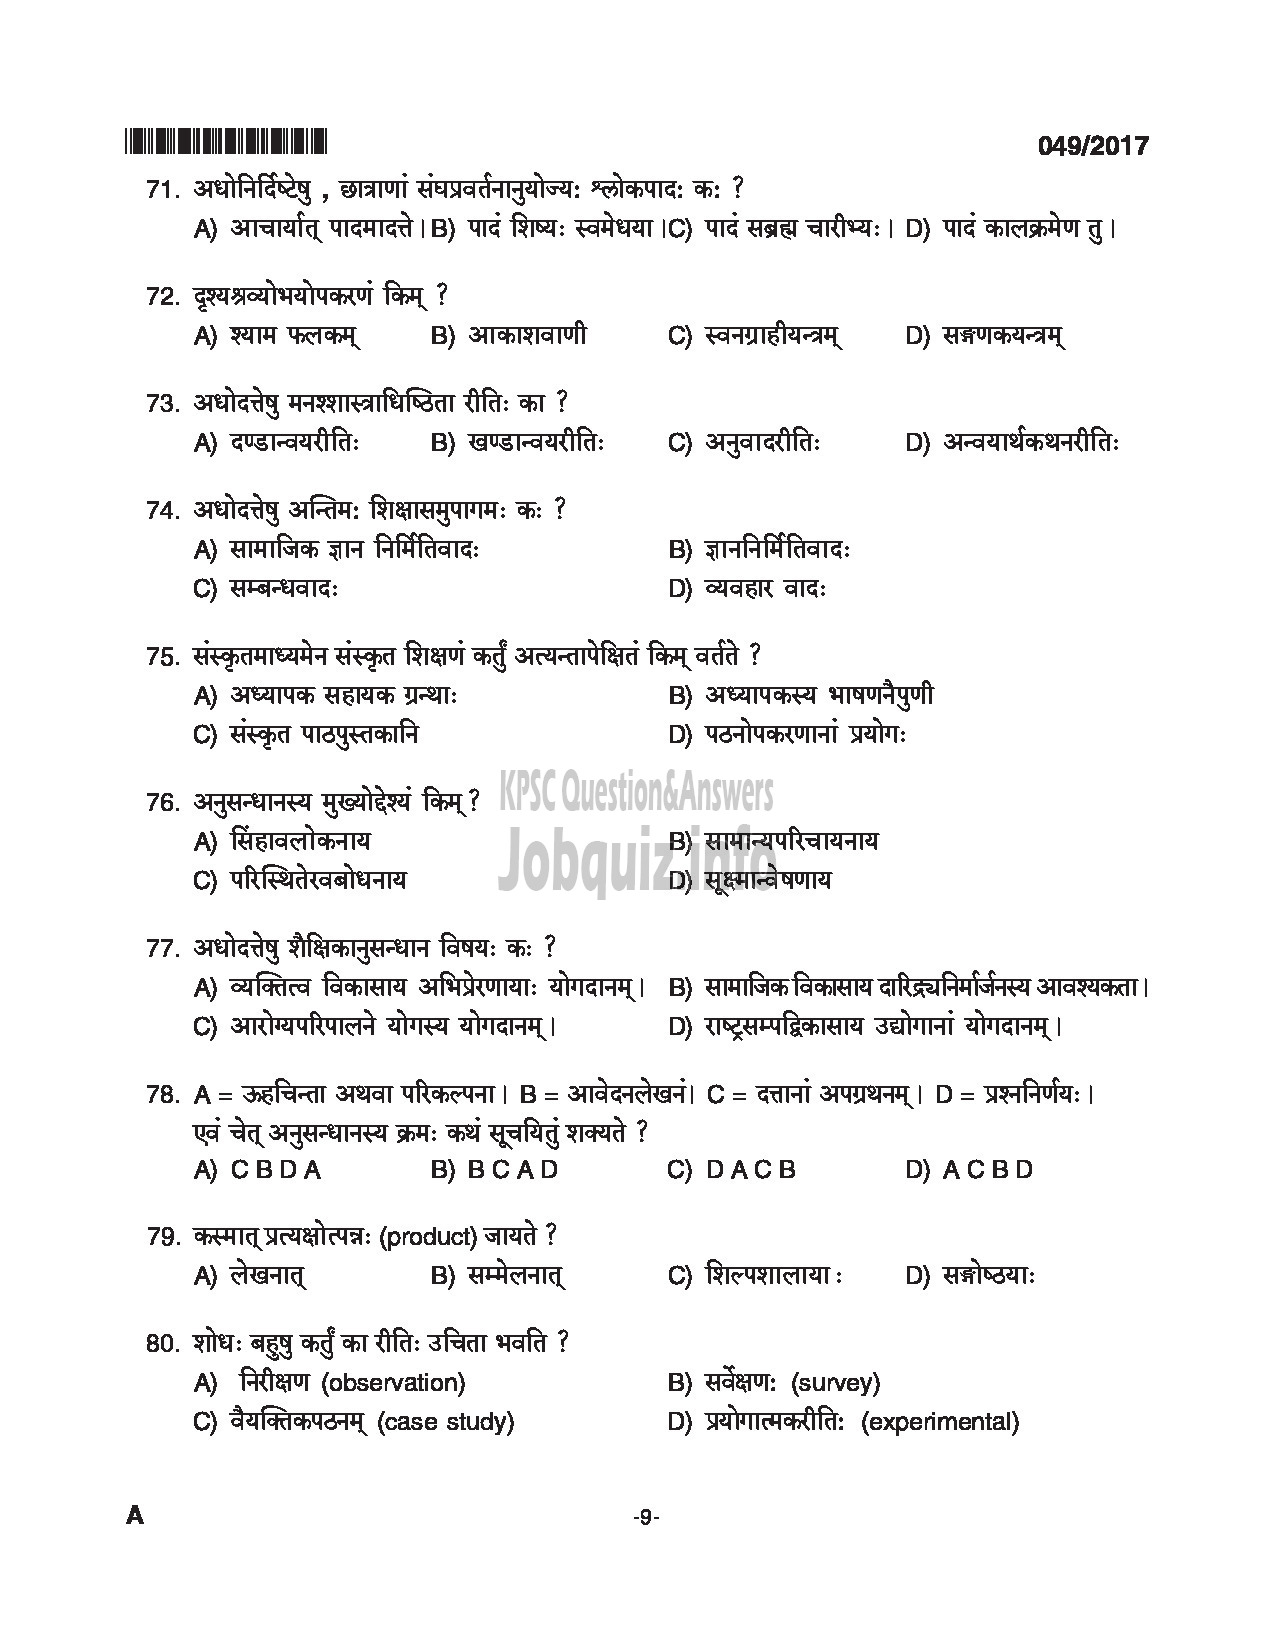 Kerala PSC Question Paper - LECTURER IN SANSKRIT GENERAL COLLEGIATE EDN 133/2015-9